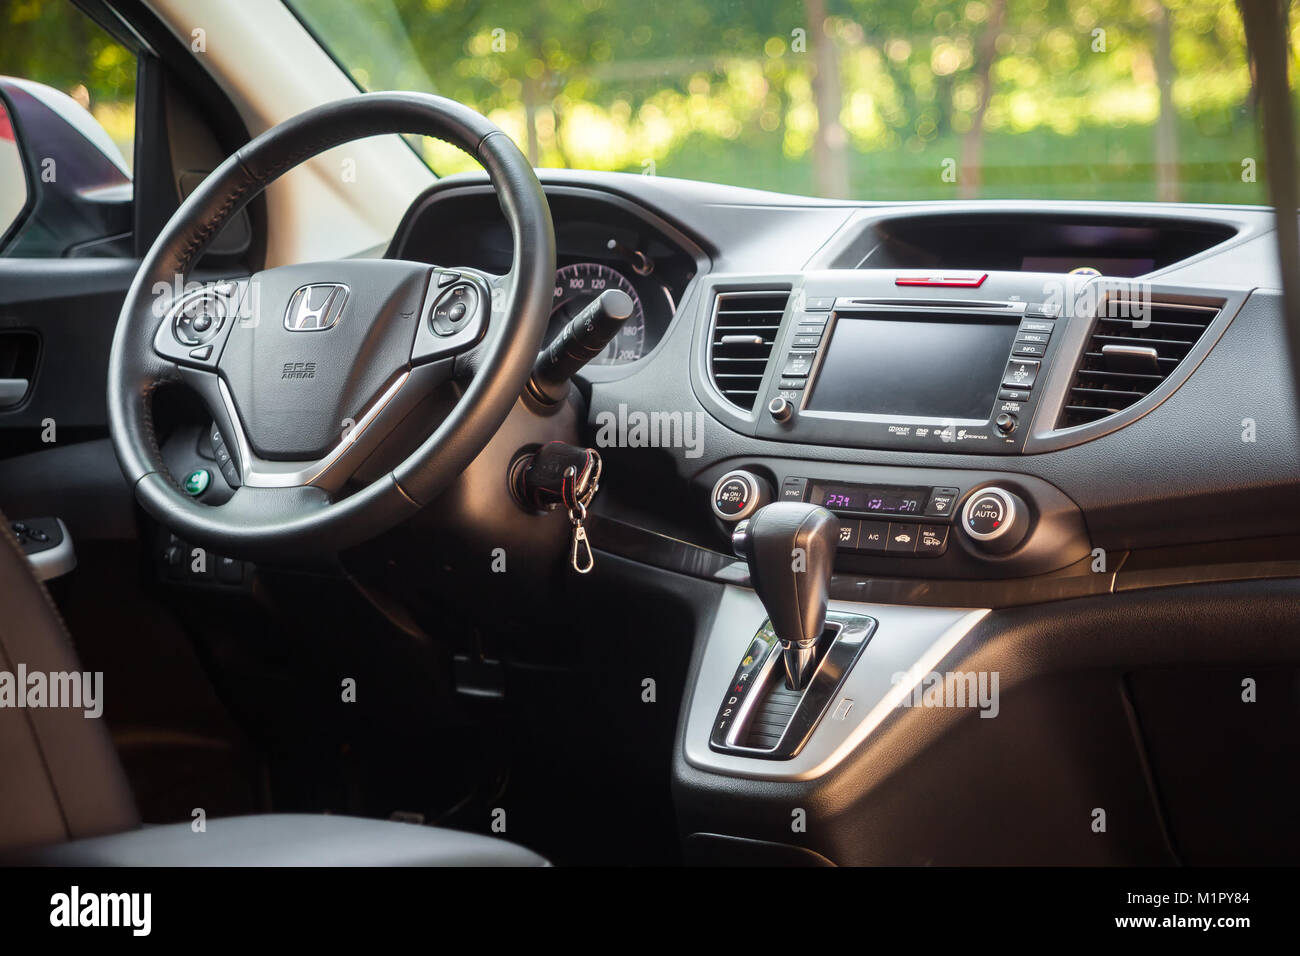 Honda crv interior hi-res stock photography and images - Alamy